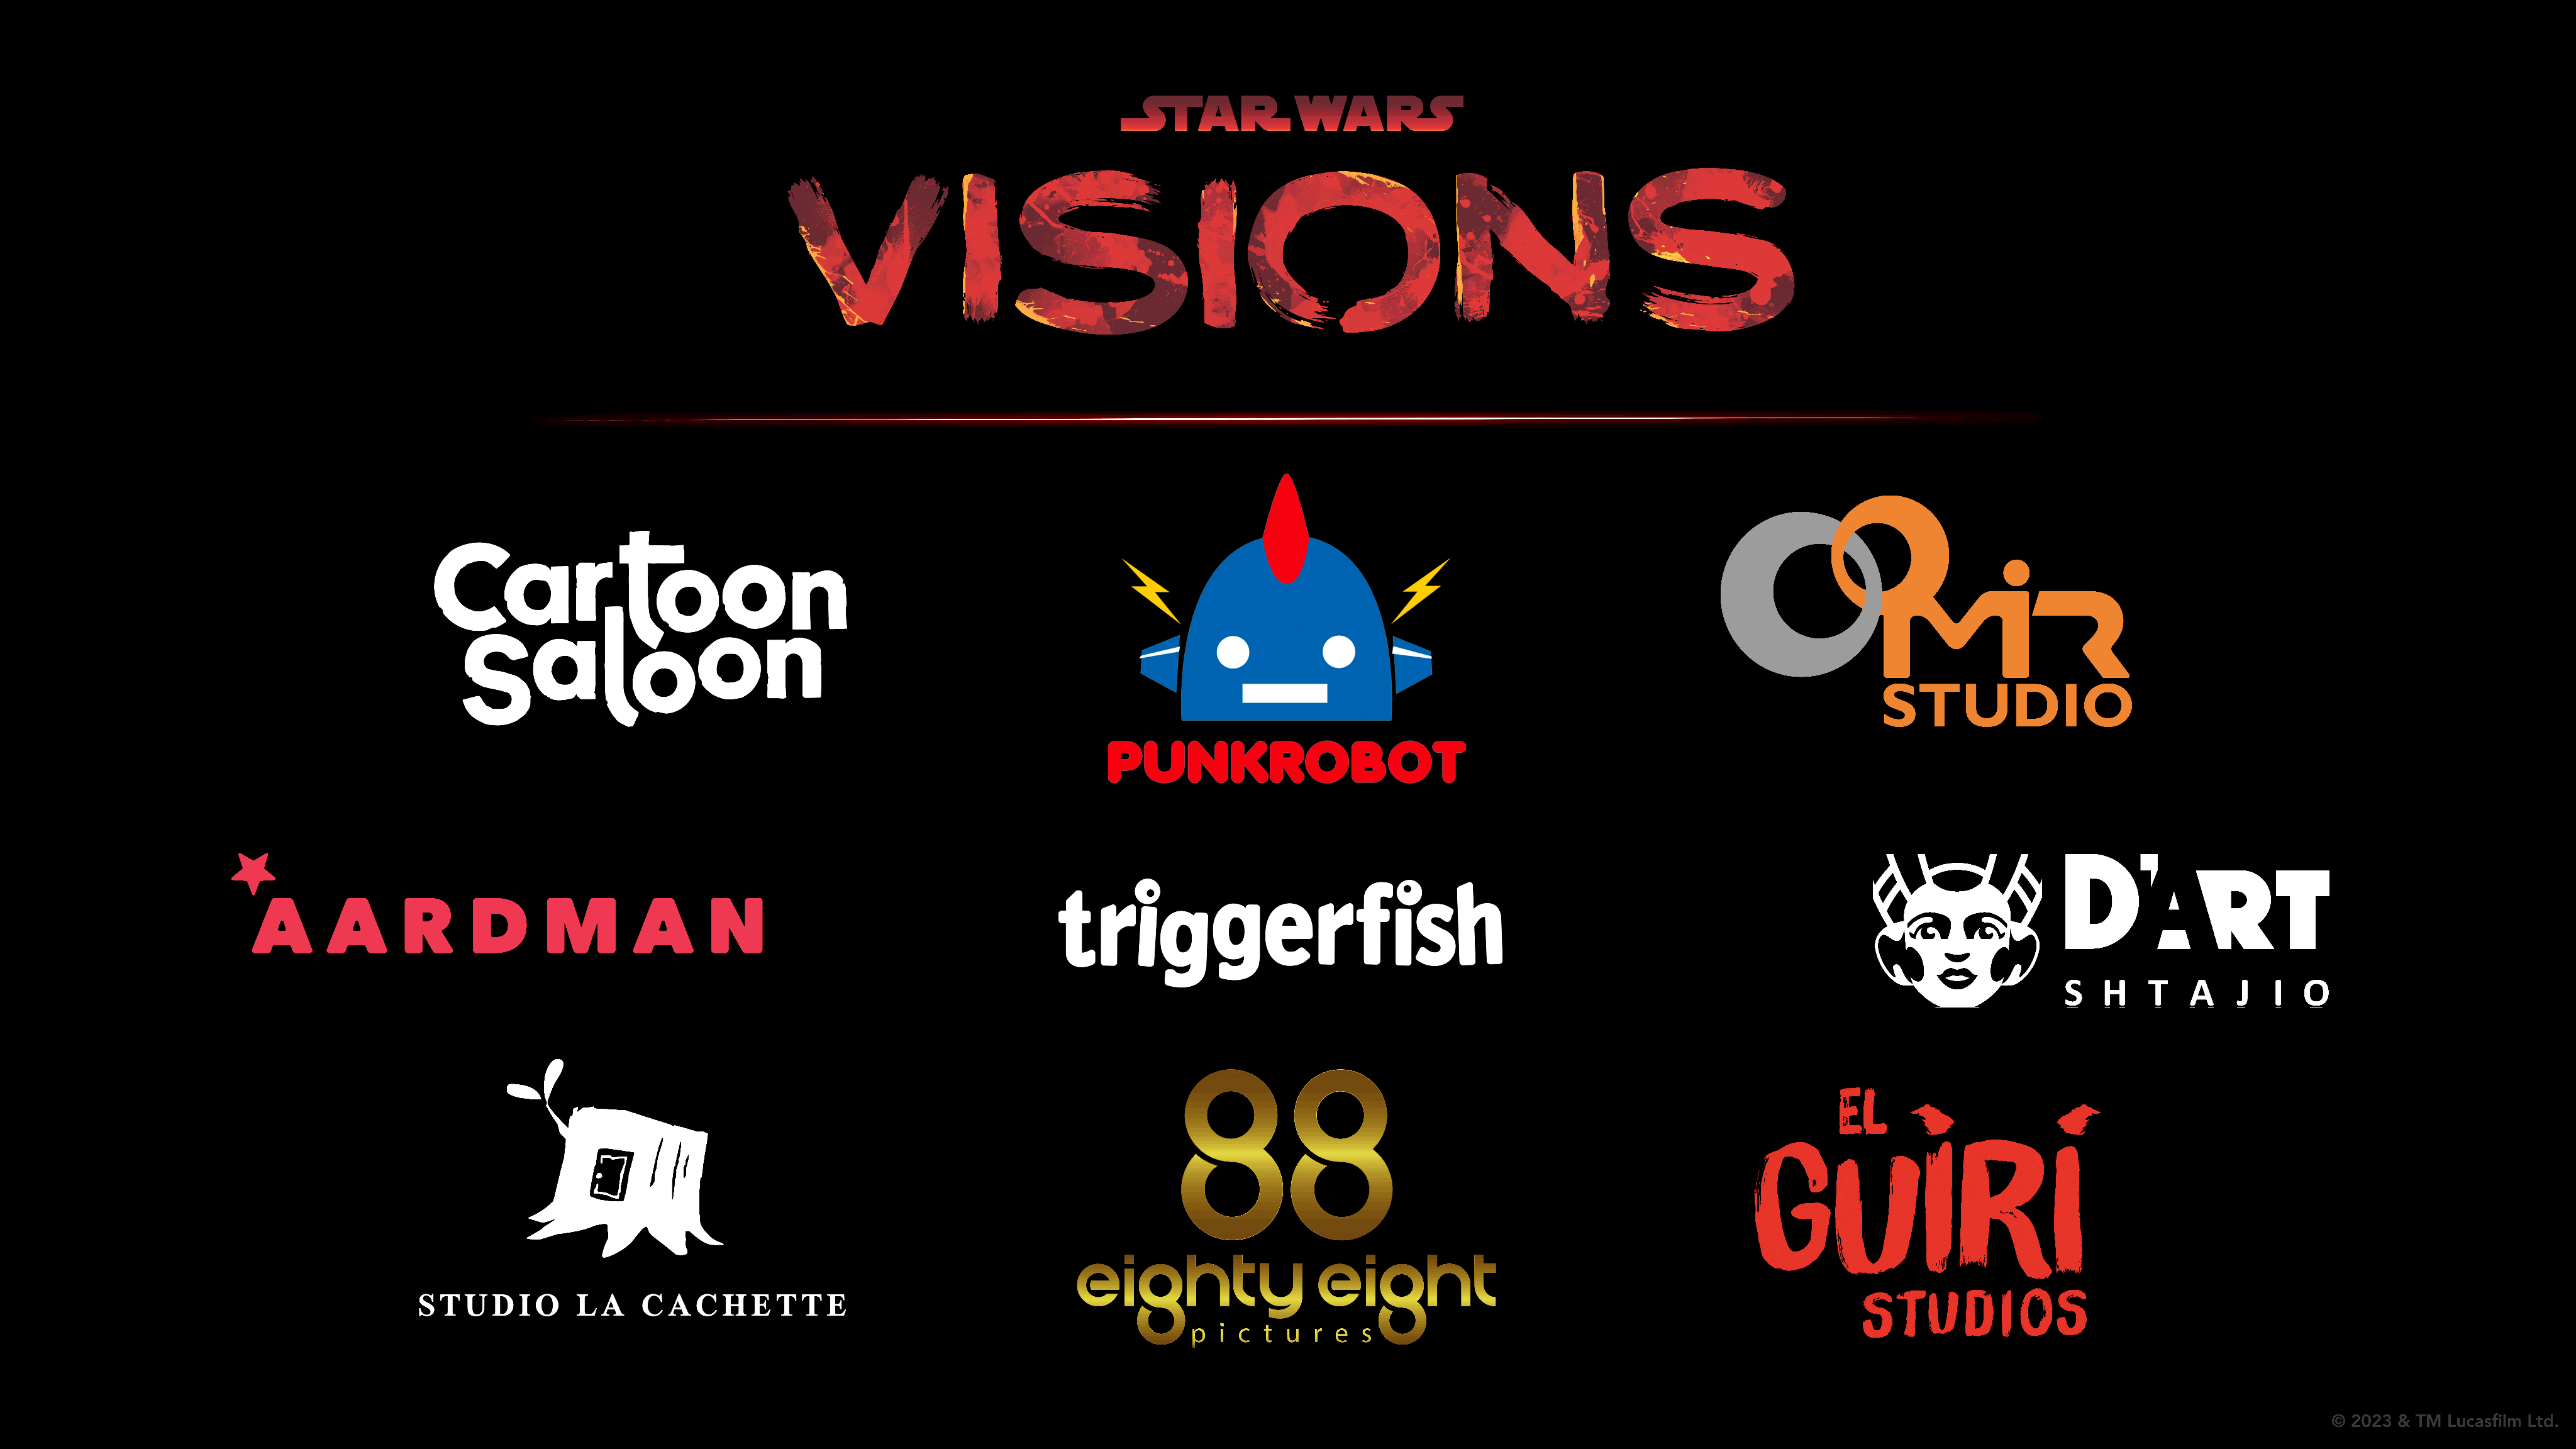 Logos of the following international animation studios: El Guiri (Spain), Cartoon Saloon (Ireland), Punkrobot (Chile), Aardman (United Kingdom), Studio Mir (South Korea) Studio La Cachette (France), 88 Pictures (India), D'art Shtajio (Japan), and Triggerfish (South Africa).